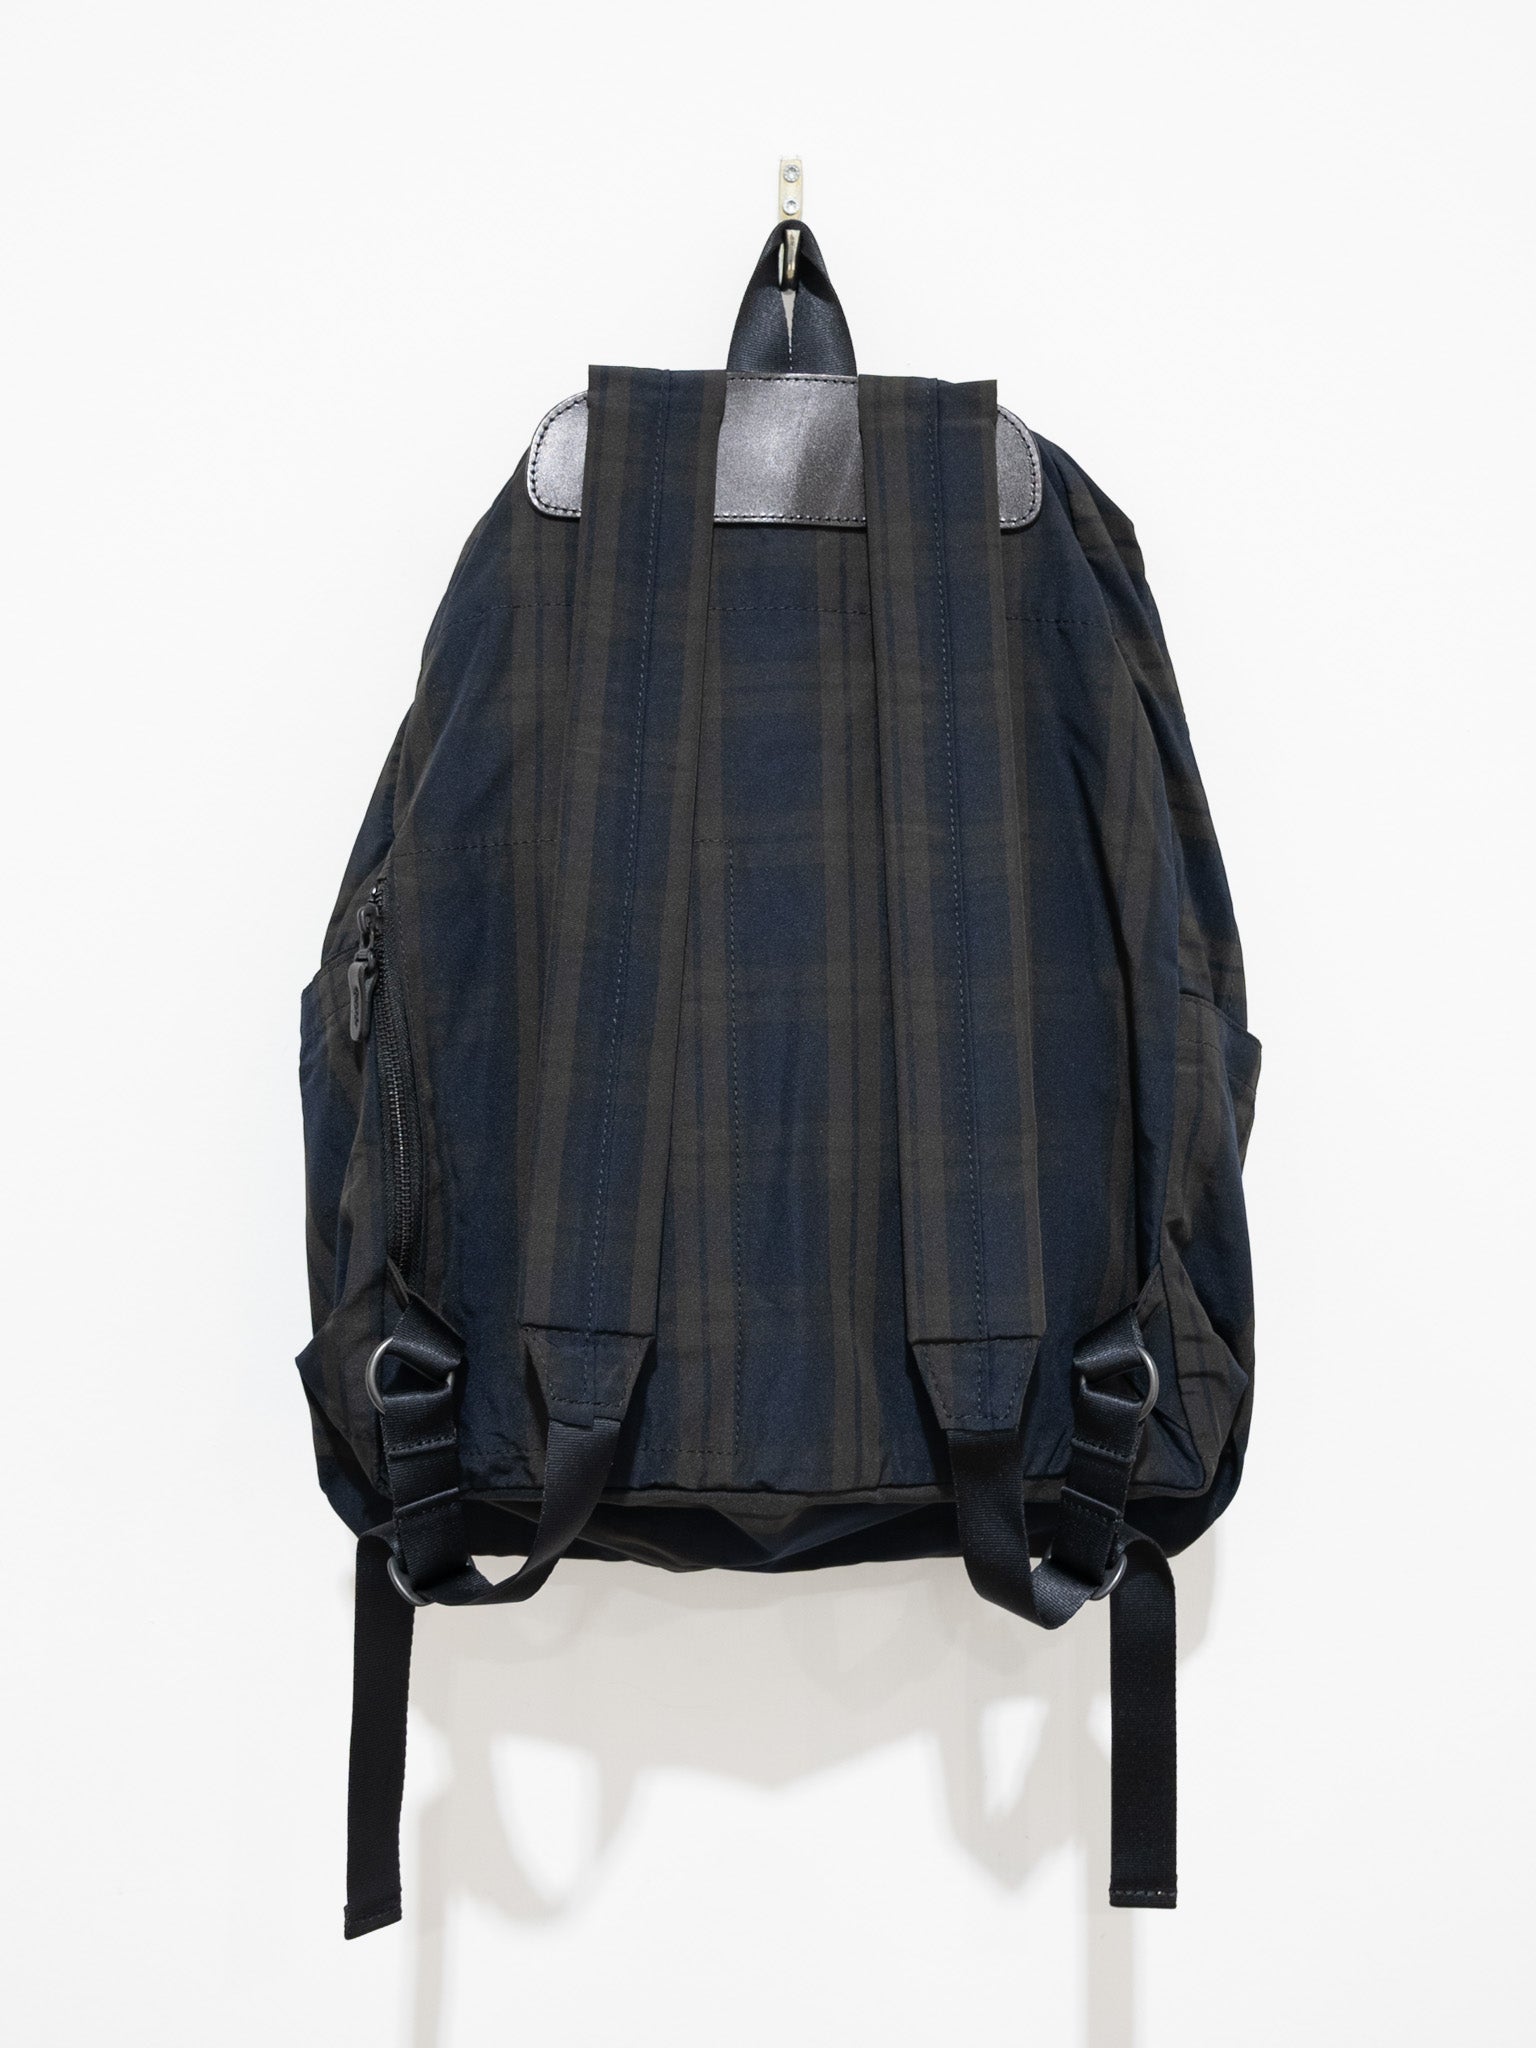 Buy Superdry Black Denim Casual Backpack (M91KQ005-Black Denim) at Amazon.in